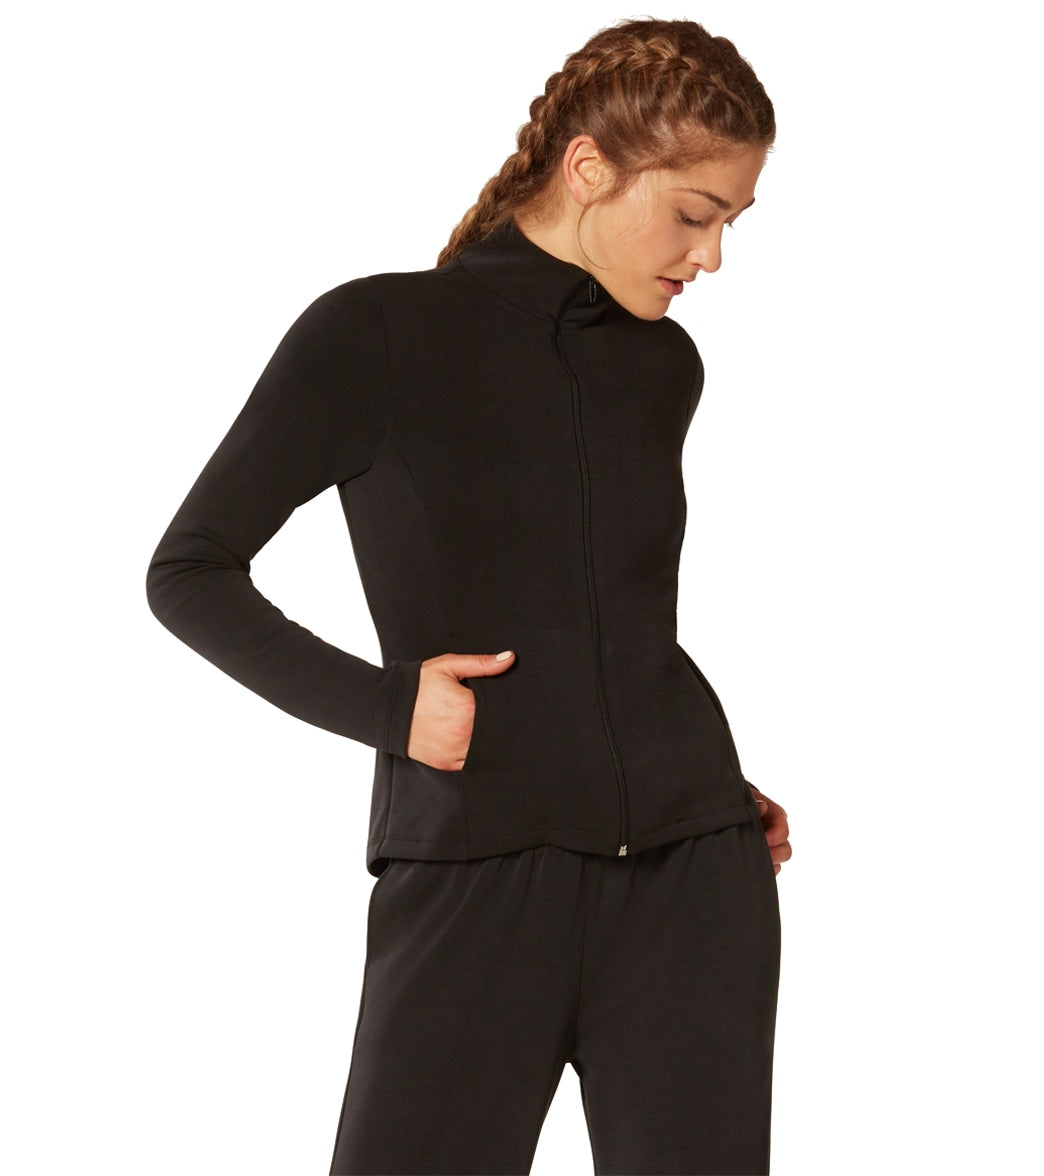 $5 off $23.99 Tuff Veda Women's Yoga Jacket : r/SweetDealsCA